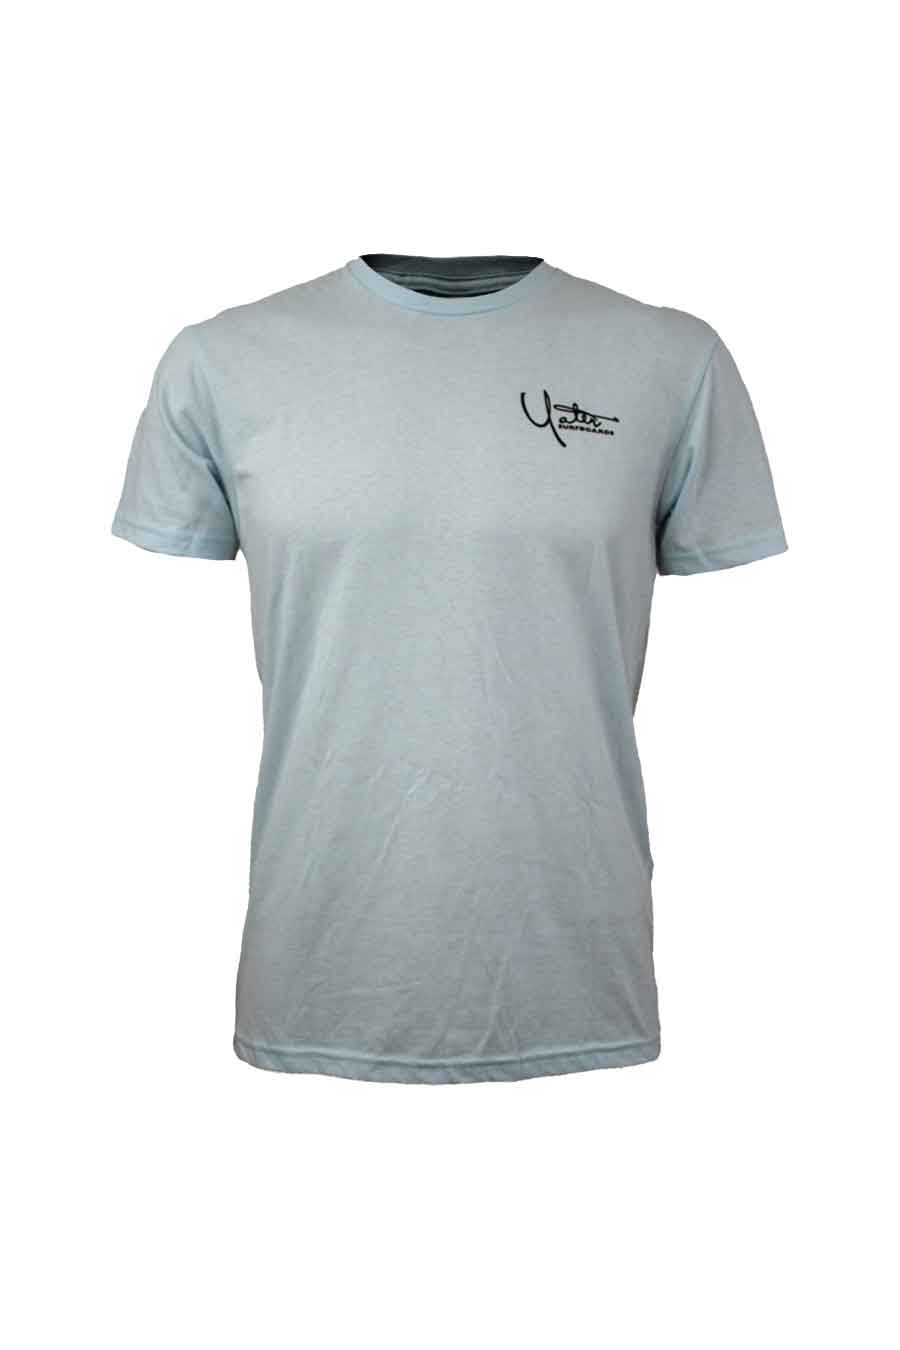 Short Sleeve T-Shirt Sueded with Santa Barbara Surf Shop Logo - Surf N' Wear Beach House Online